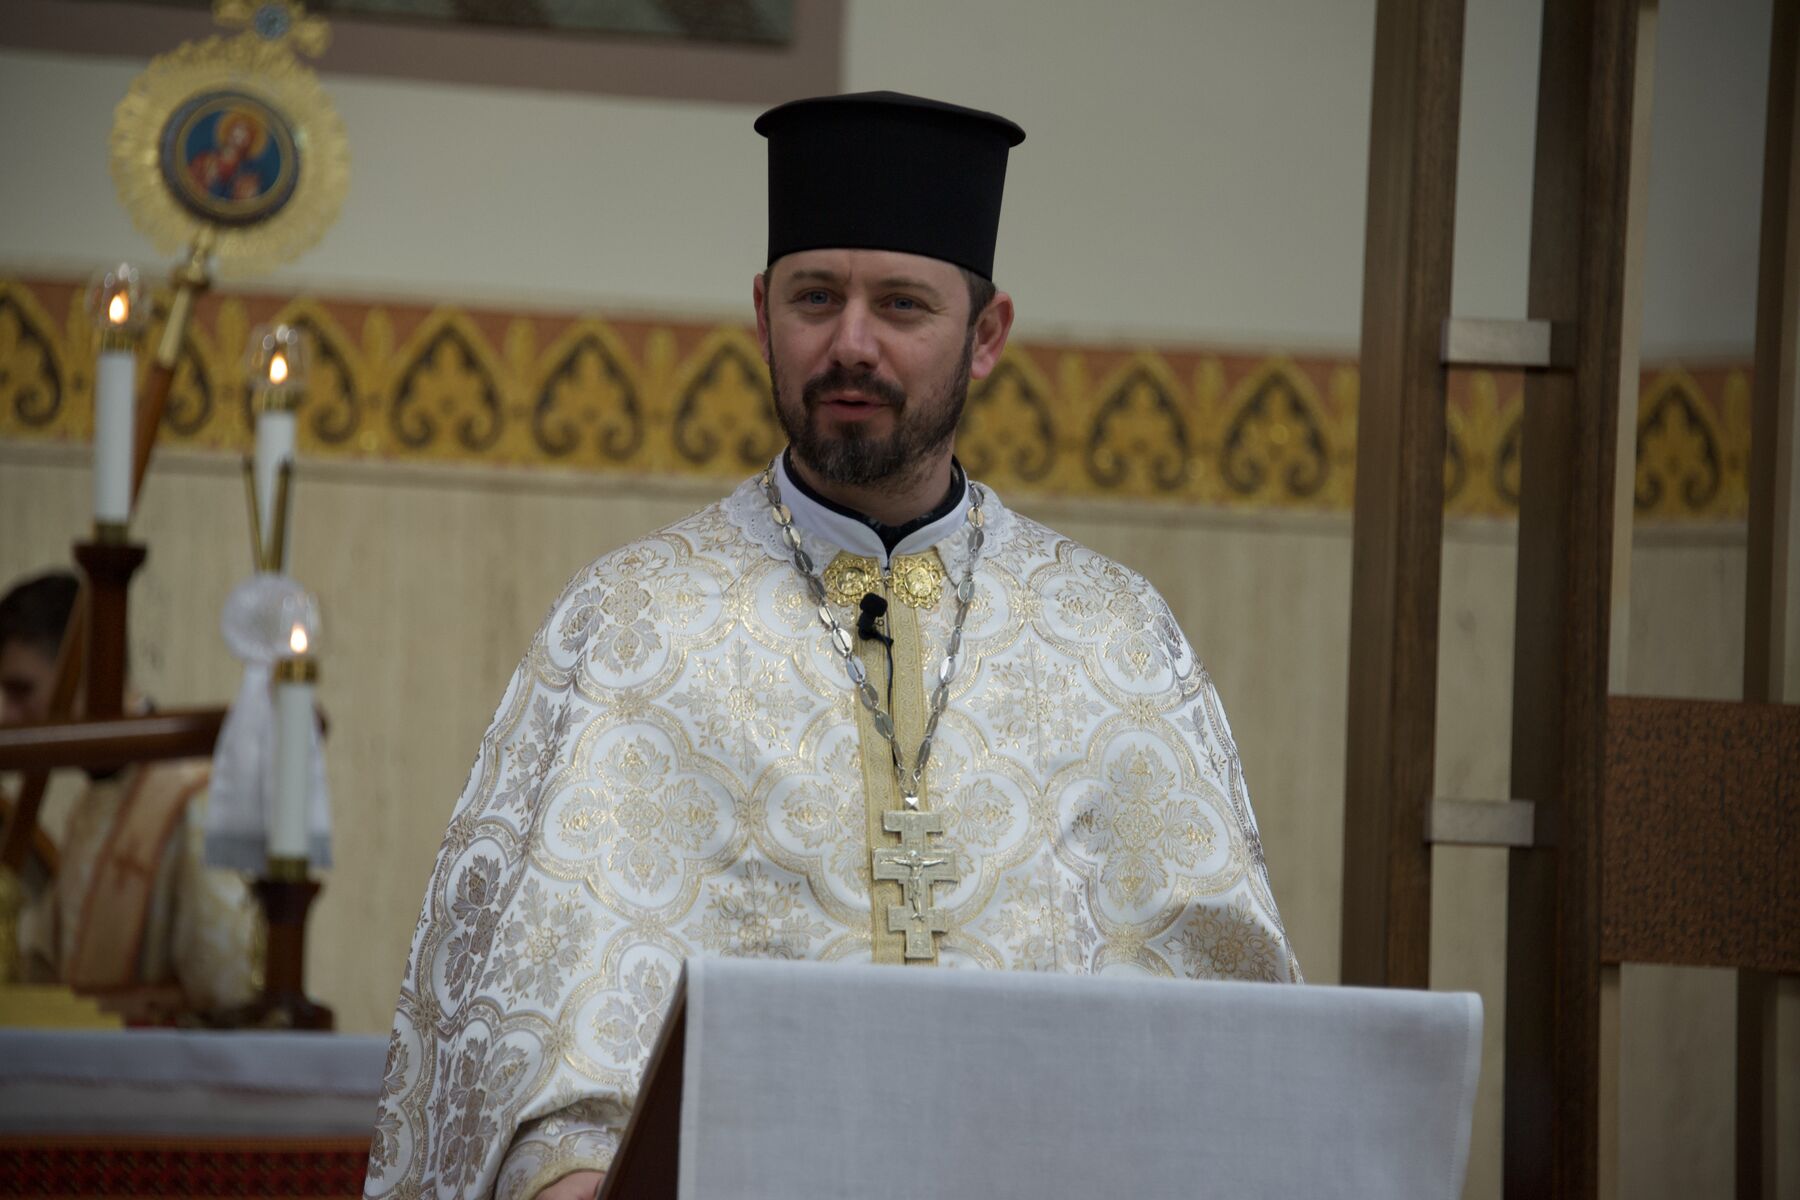 Homily by Fr. Andriy Mykytyuk on the Sunday before the Exaltation